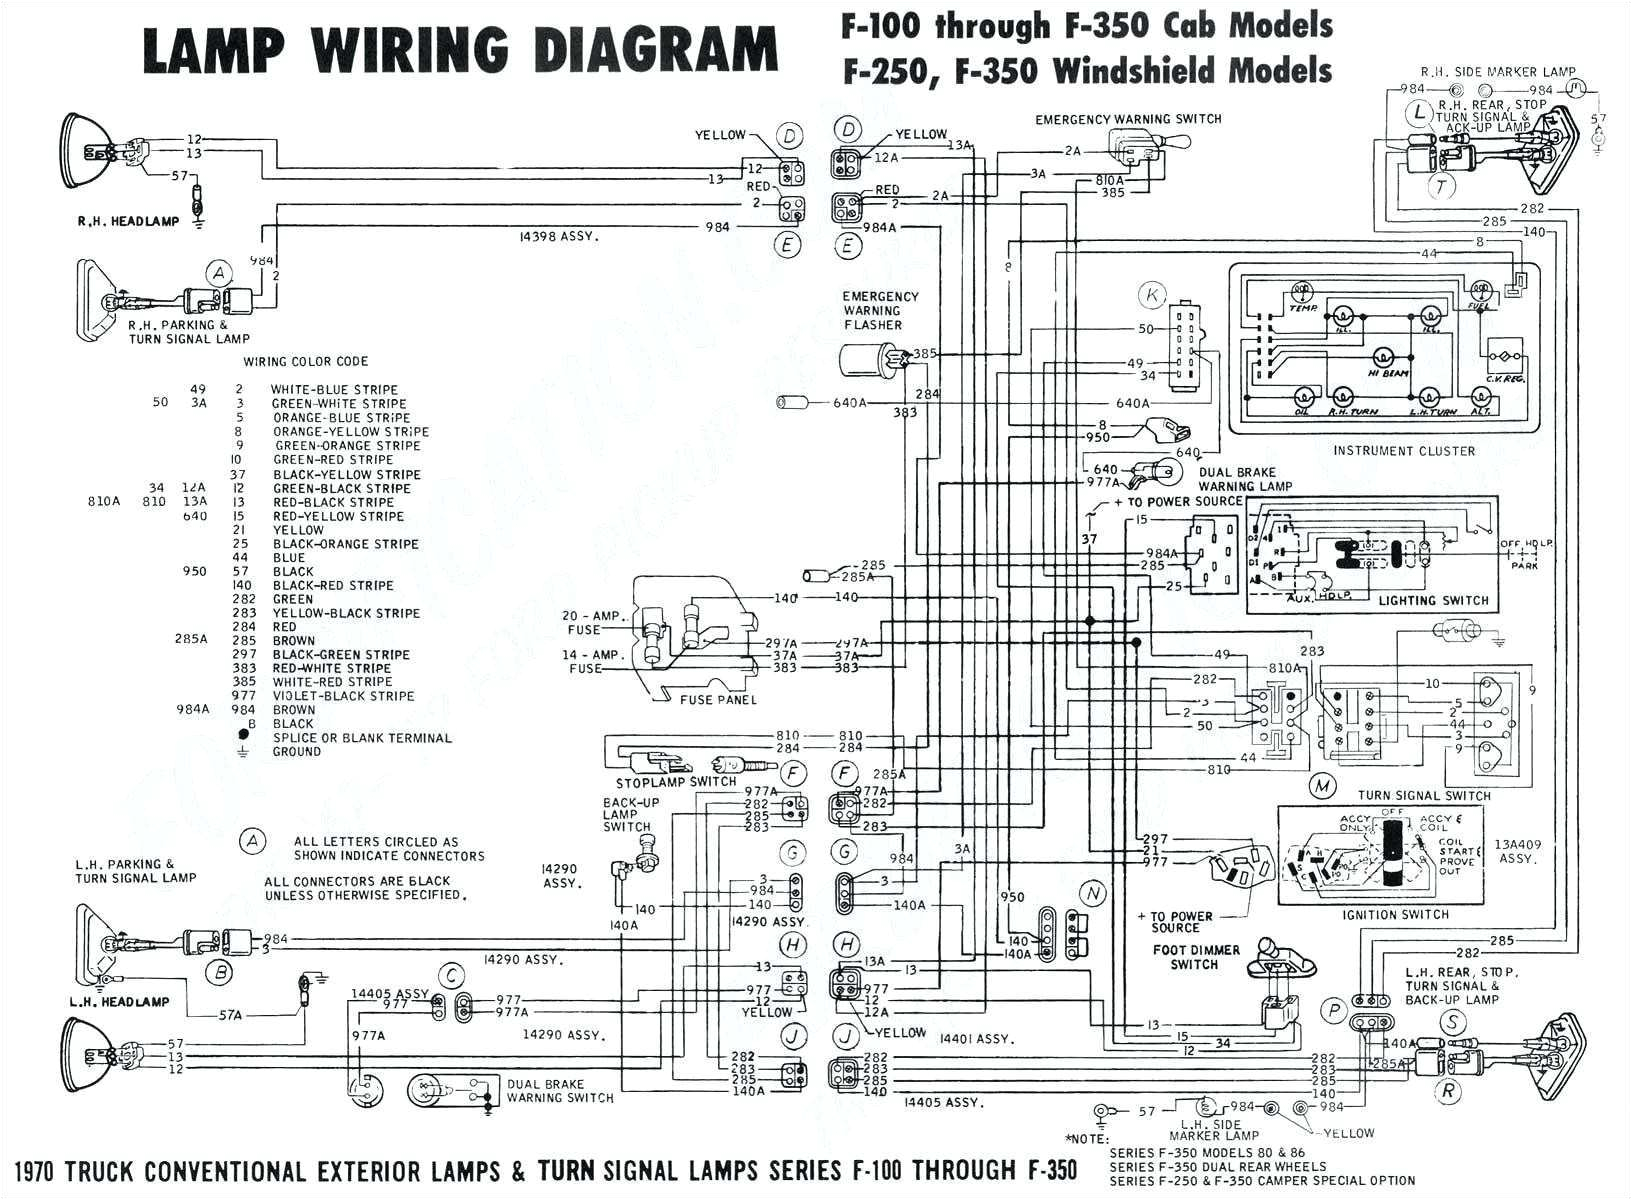 2000 jetta cruise control wiring diagram free download experience 2000 jetta cruise control wiring diagram